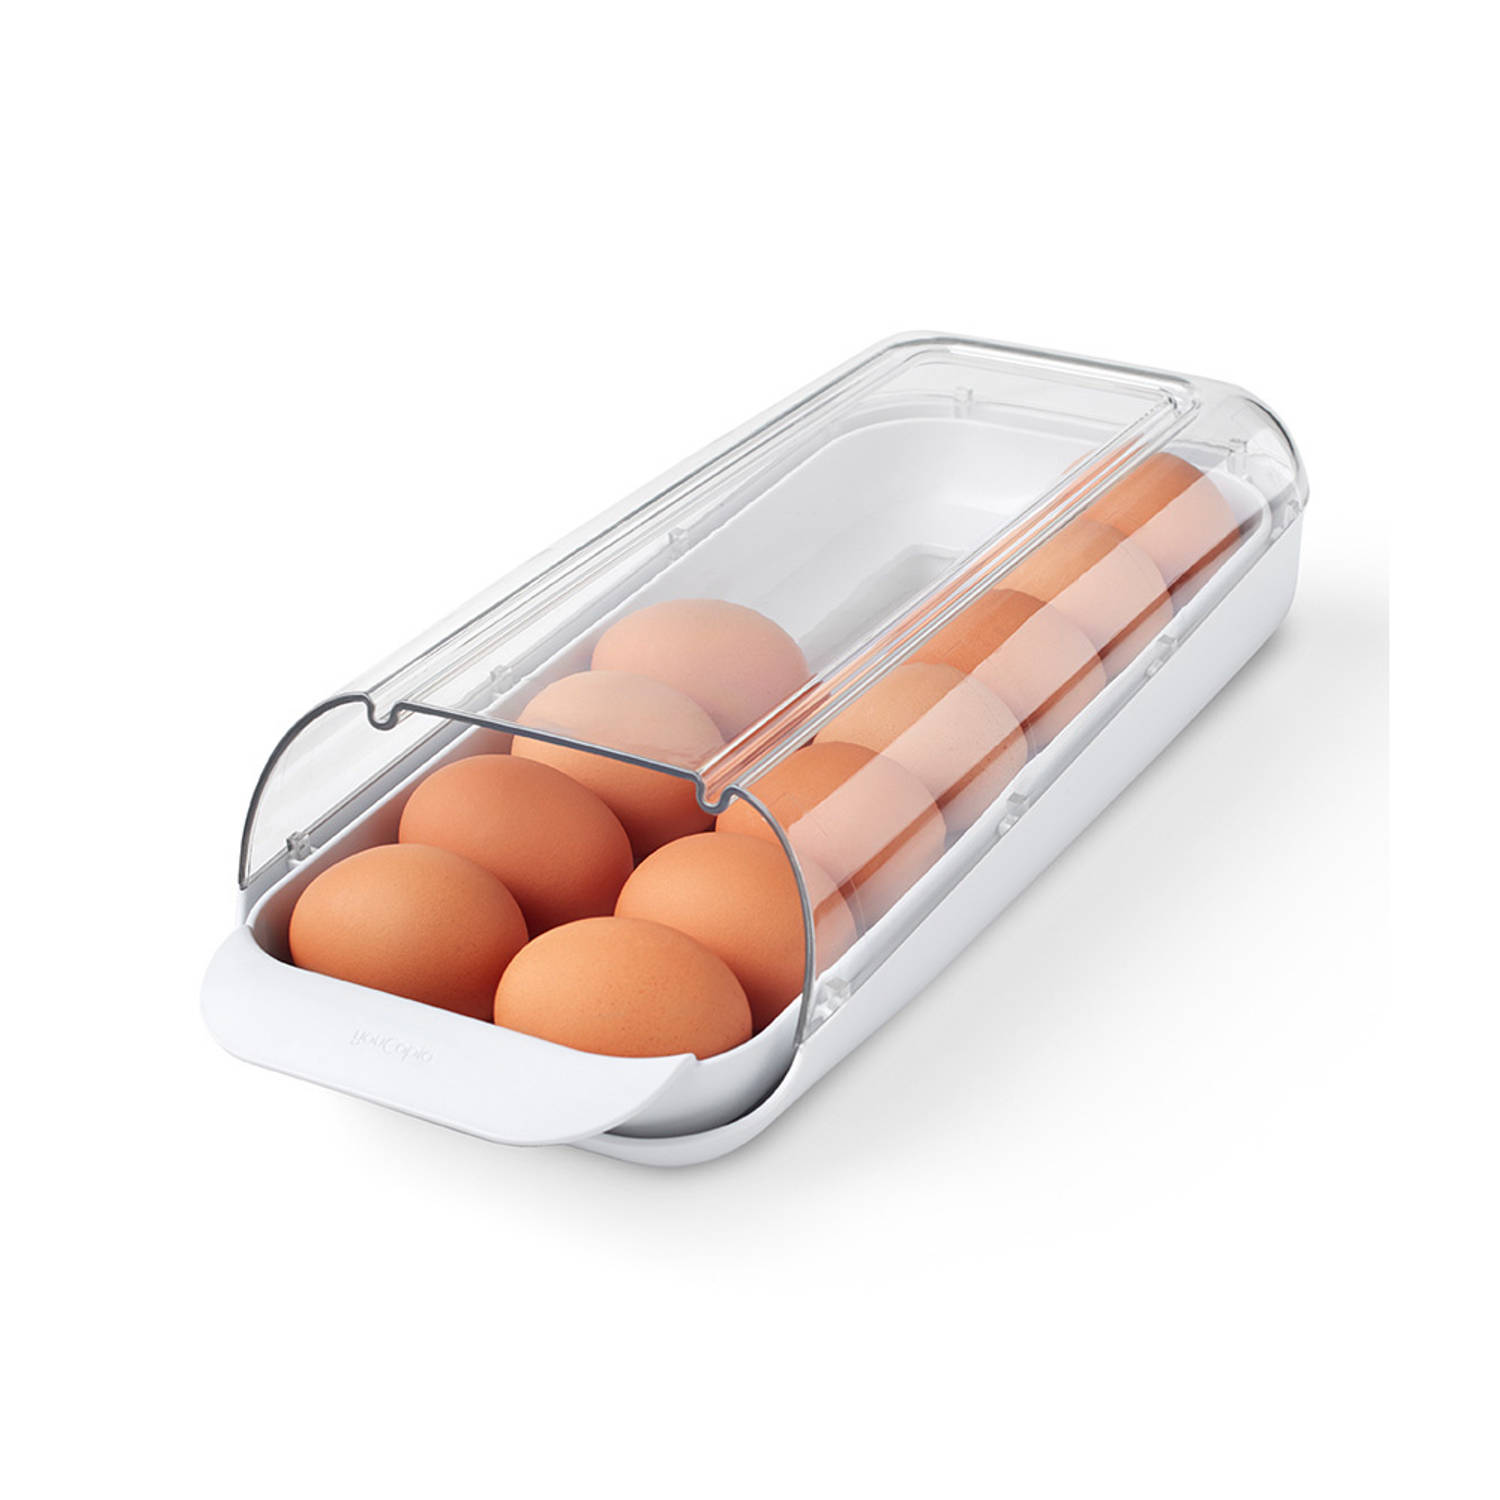 YouCopia Stapelbaar eierbakje dispenser - Wit - Stapelbaar & Met deksel